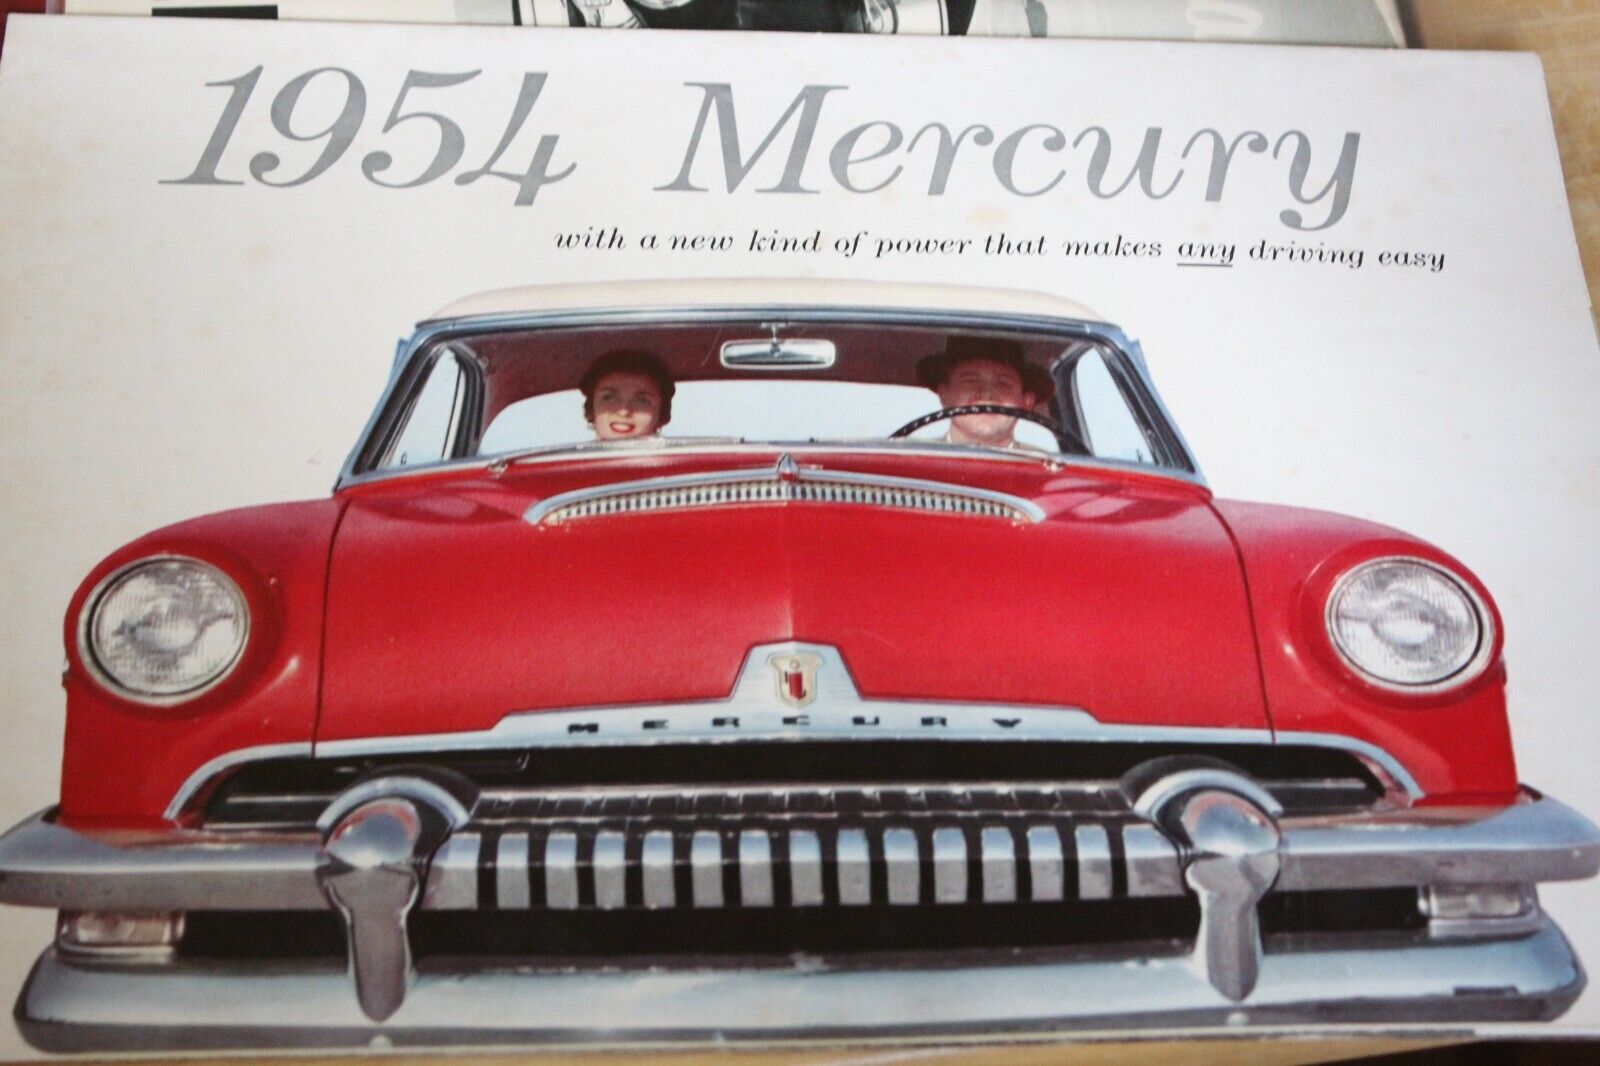 Original 1954 Mercury Sales Brochure